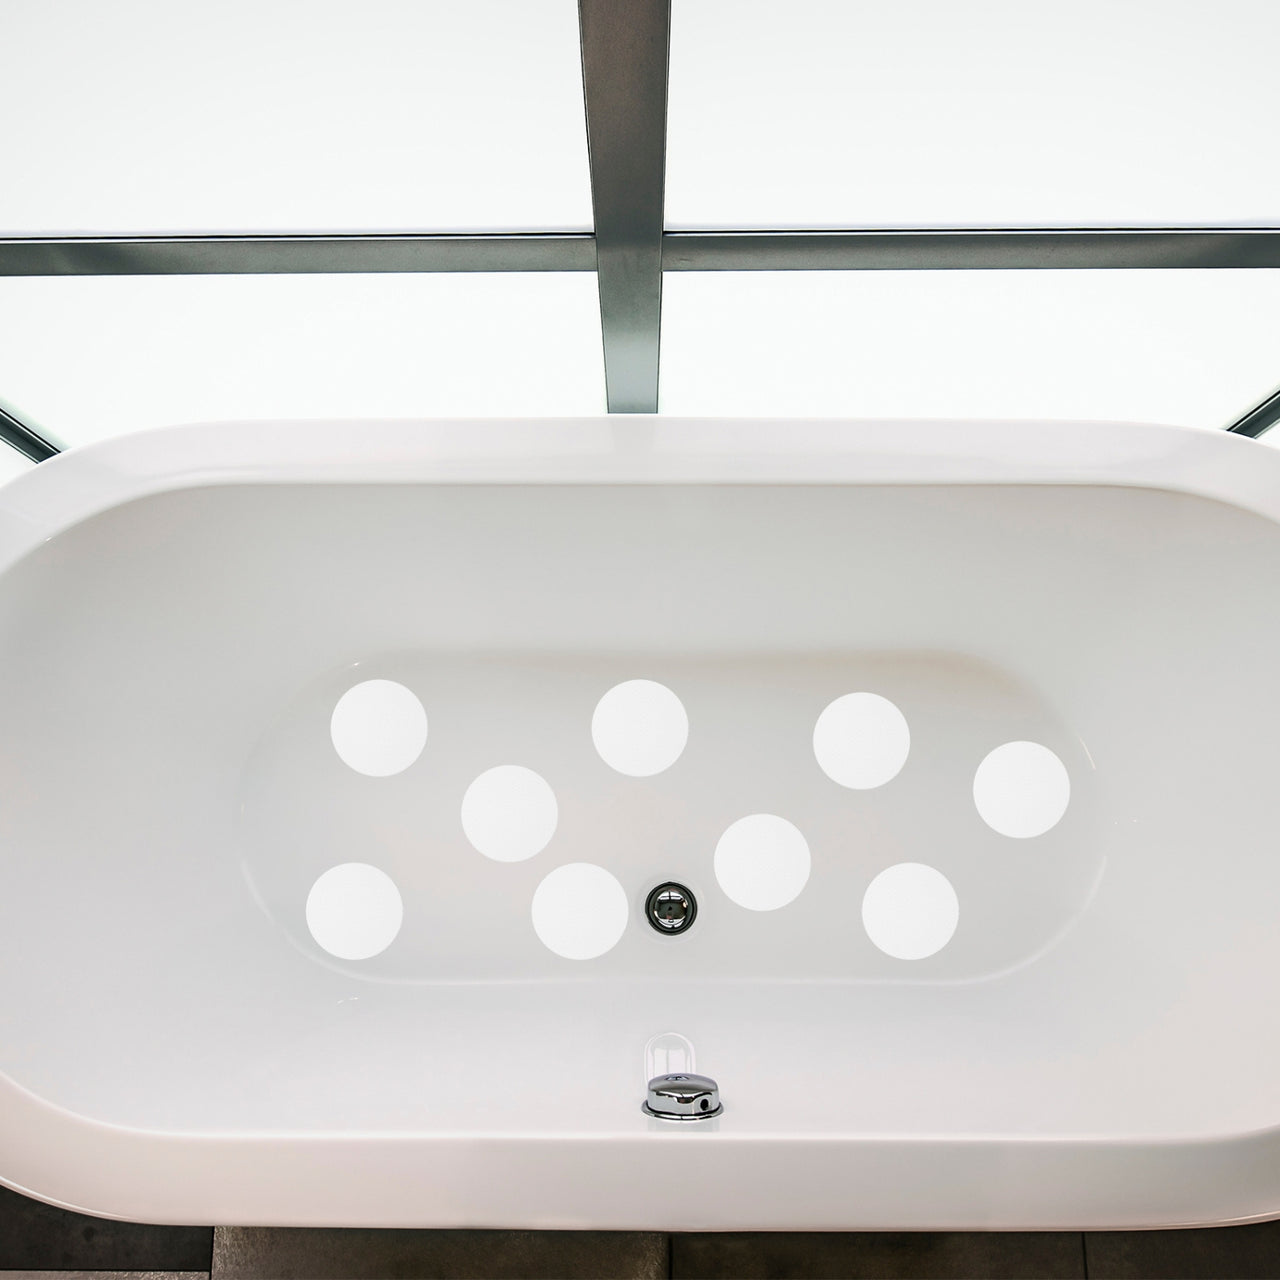 White anti slip grip sticker dots in a bath tub